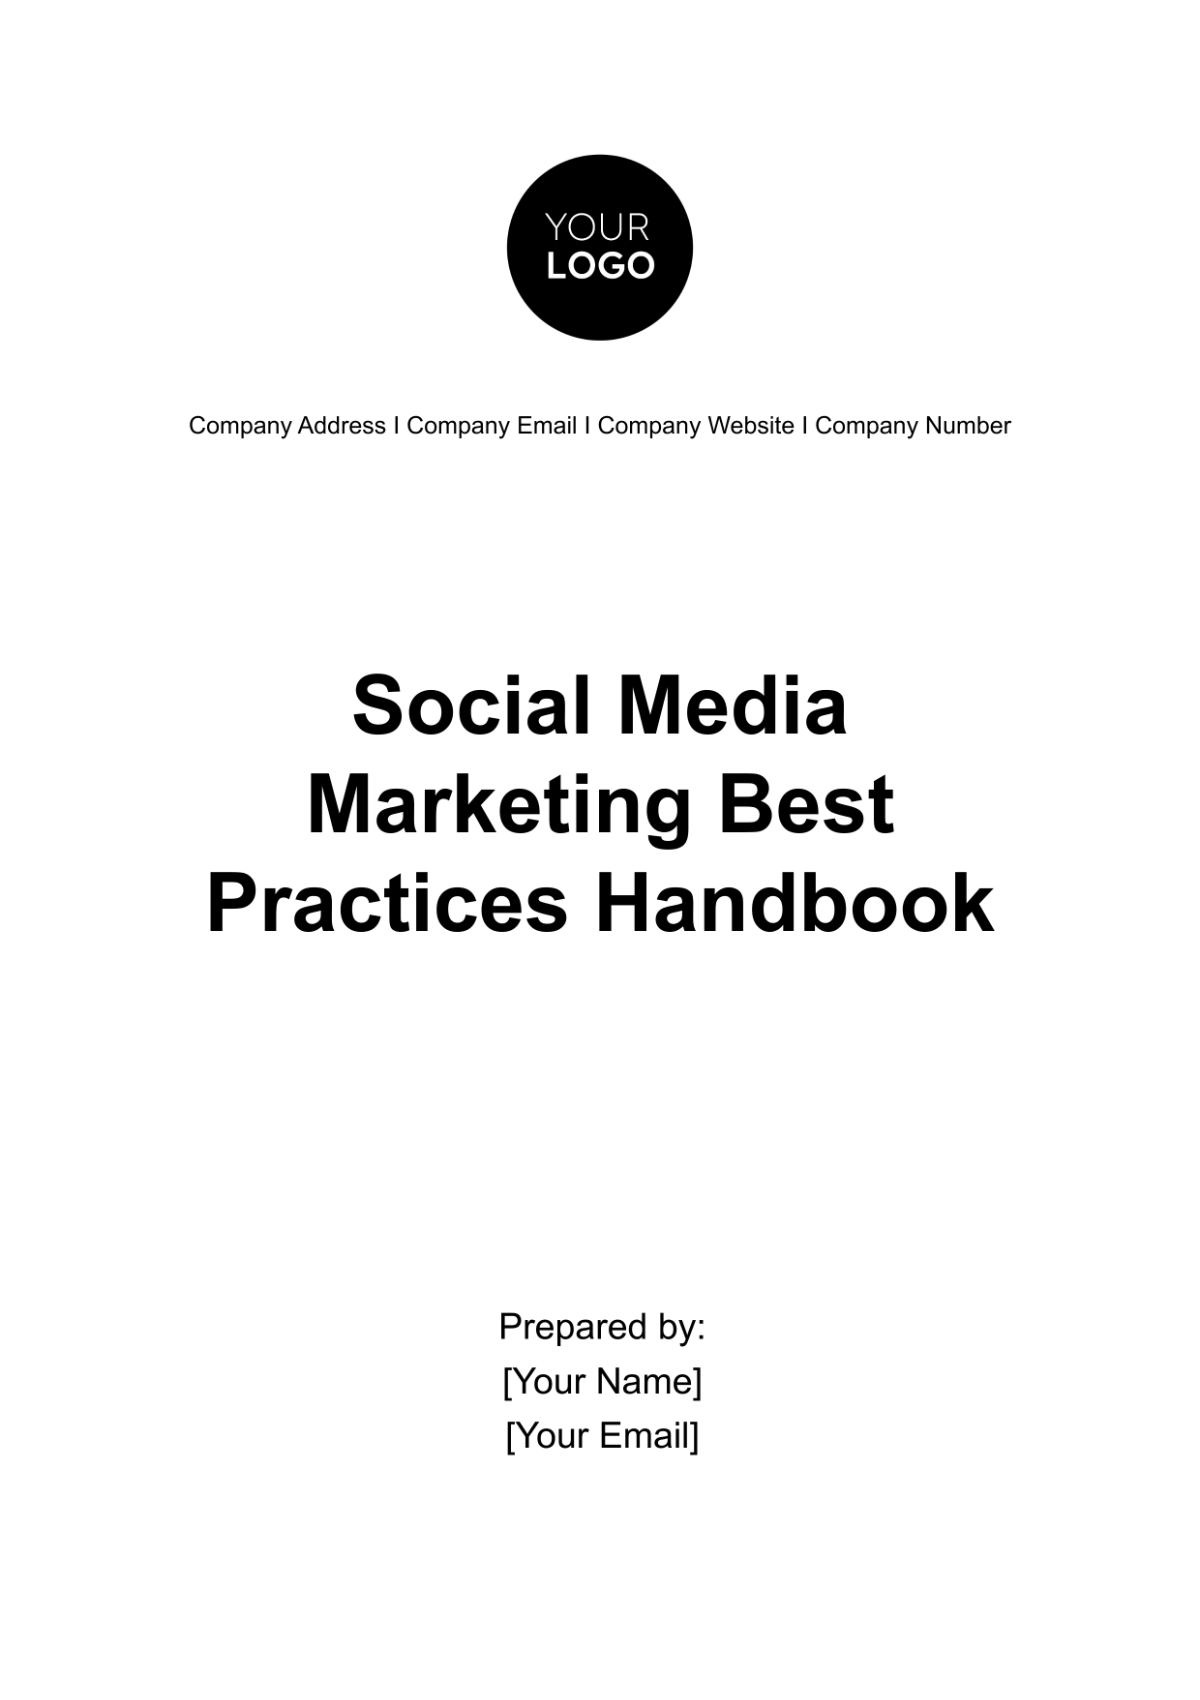 Social Media Marketing Best Practices Handbook Template